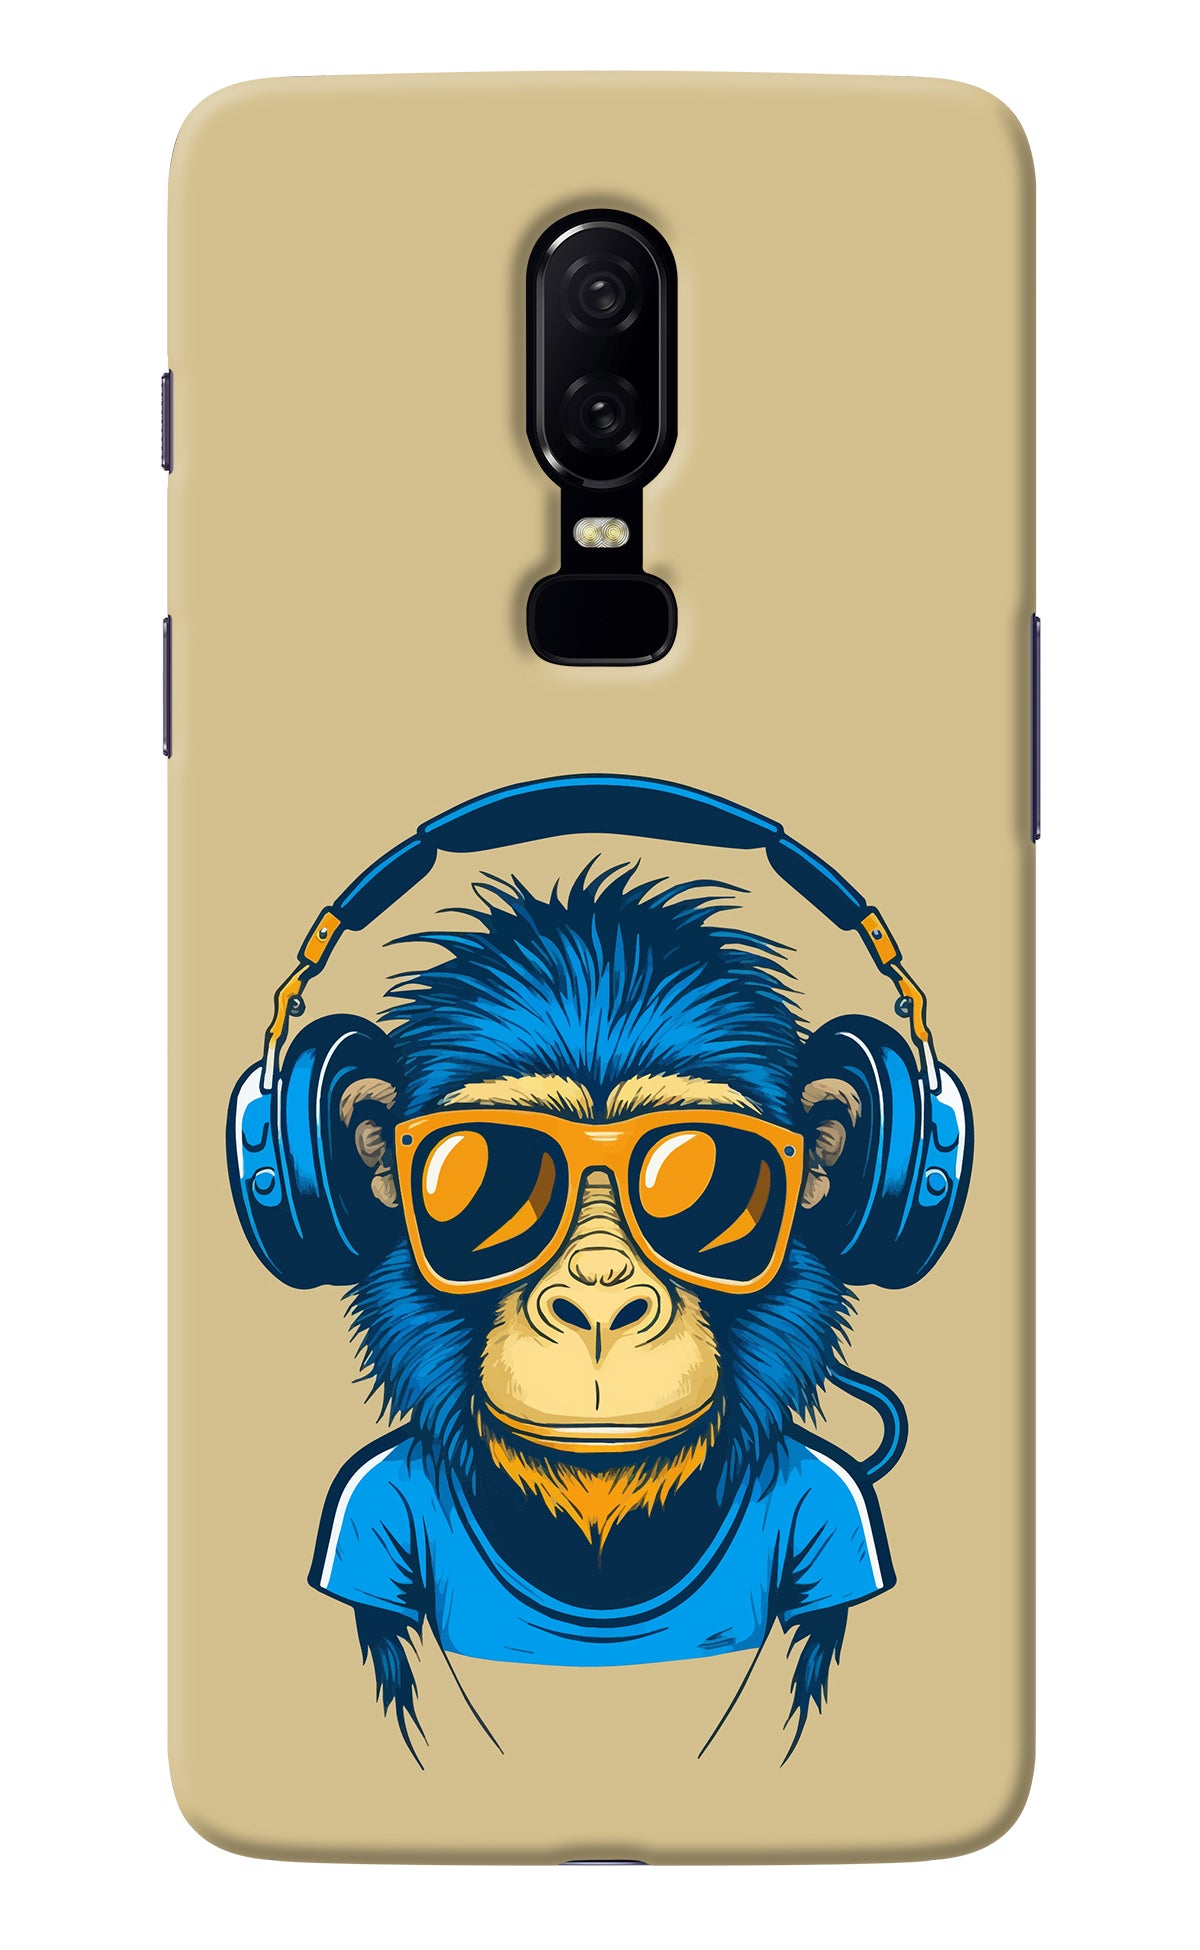 Monkey Headphone Oneplus 6 Back Cover